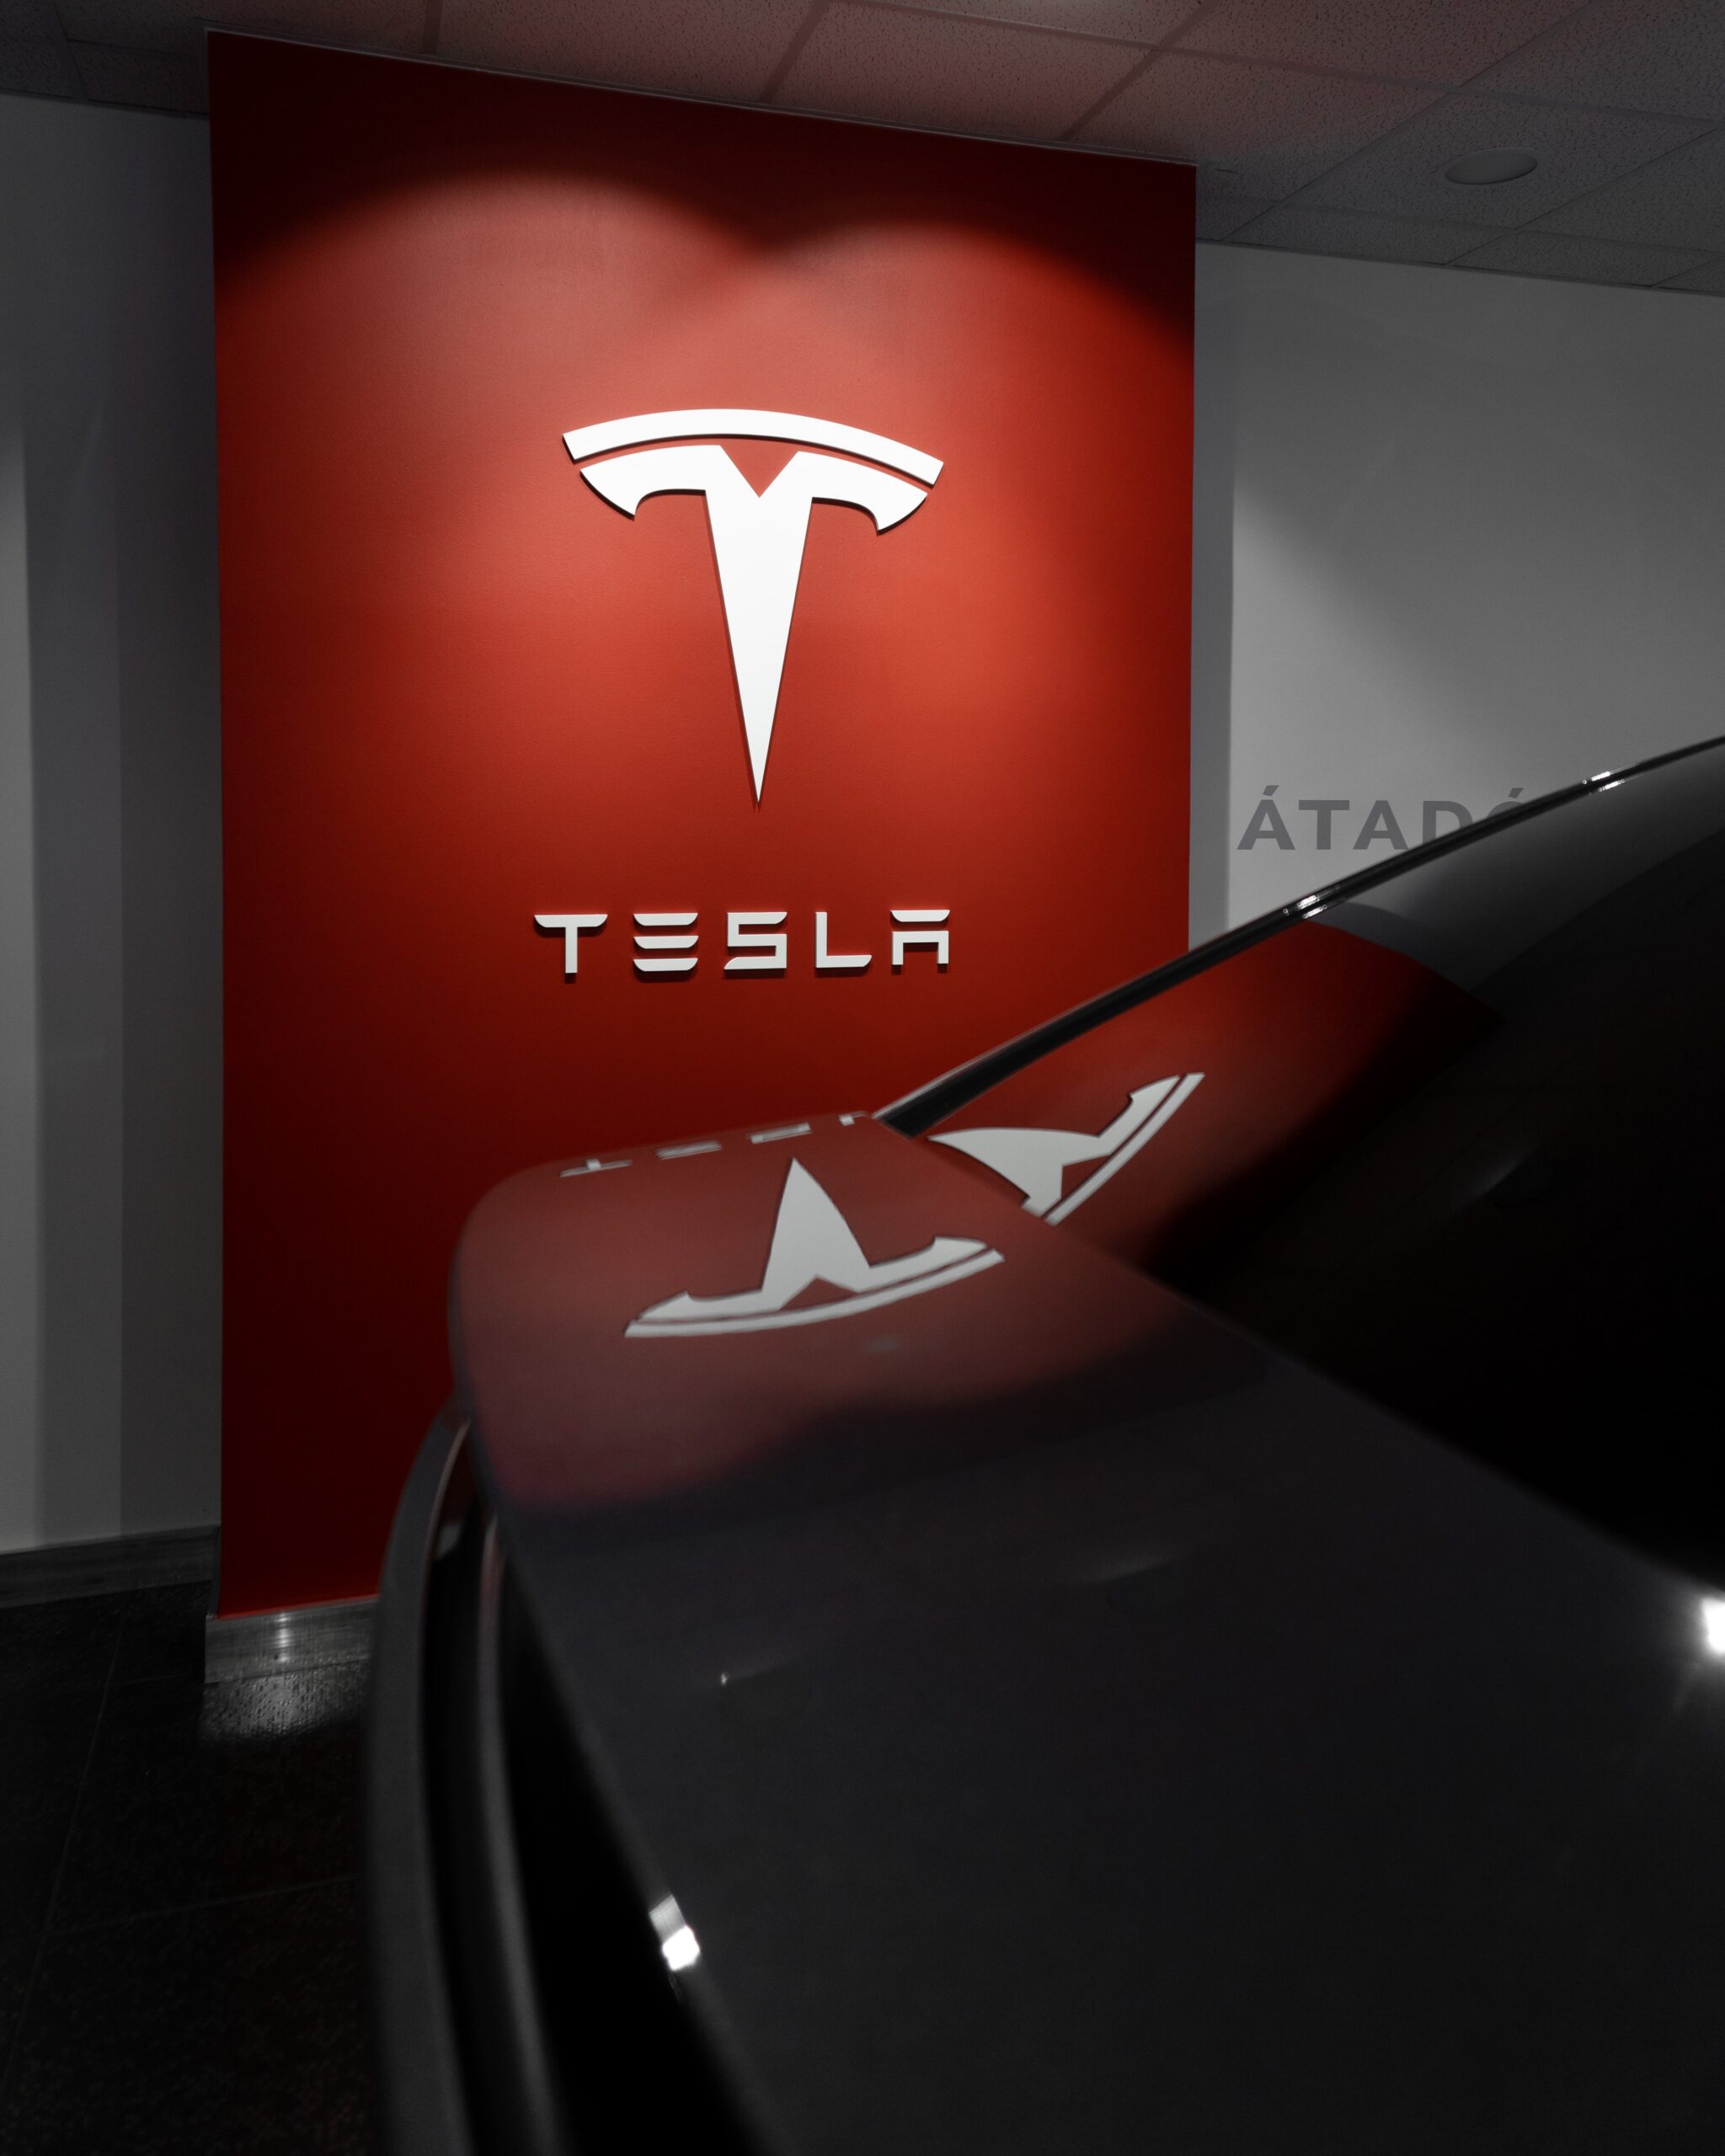 Tesla to Start high-end Model S'Plaid' to fend off Mercedes, Porsche